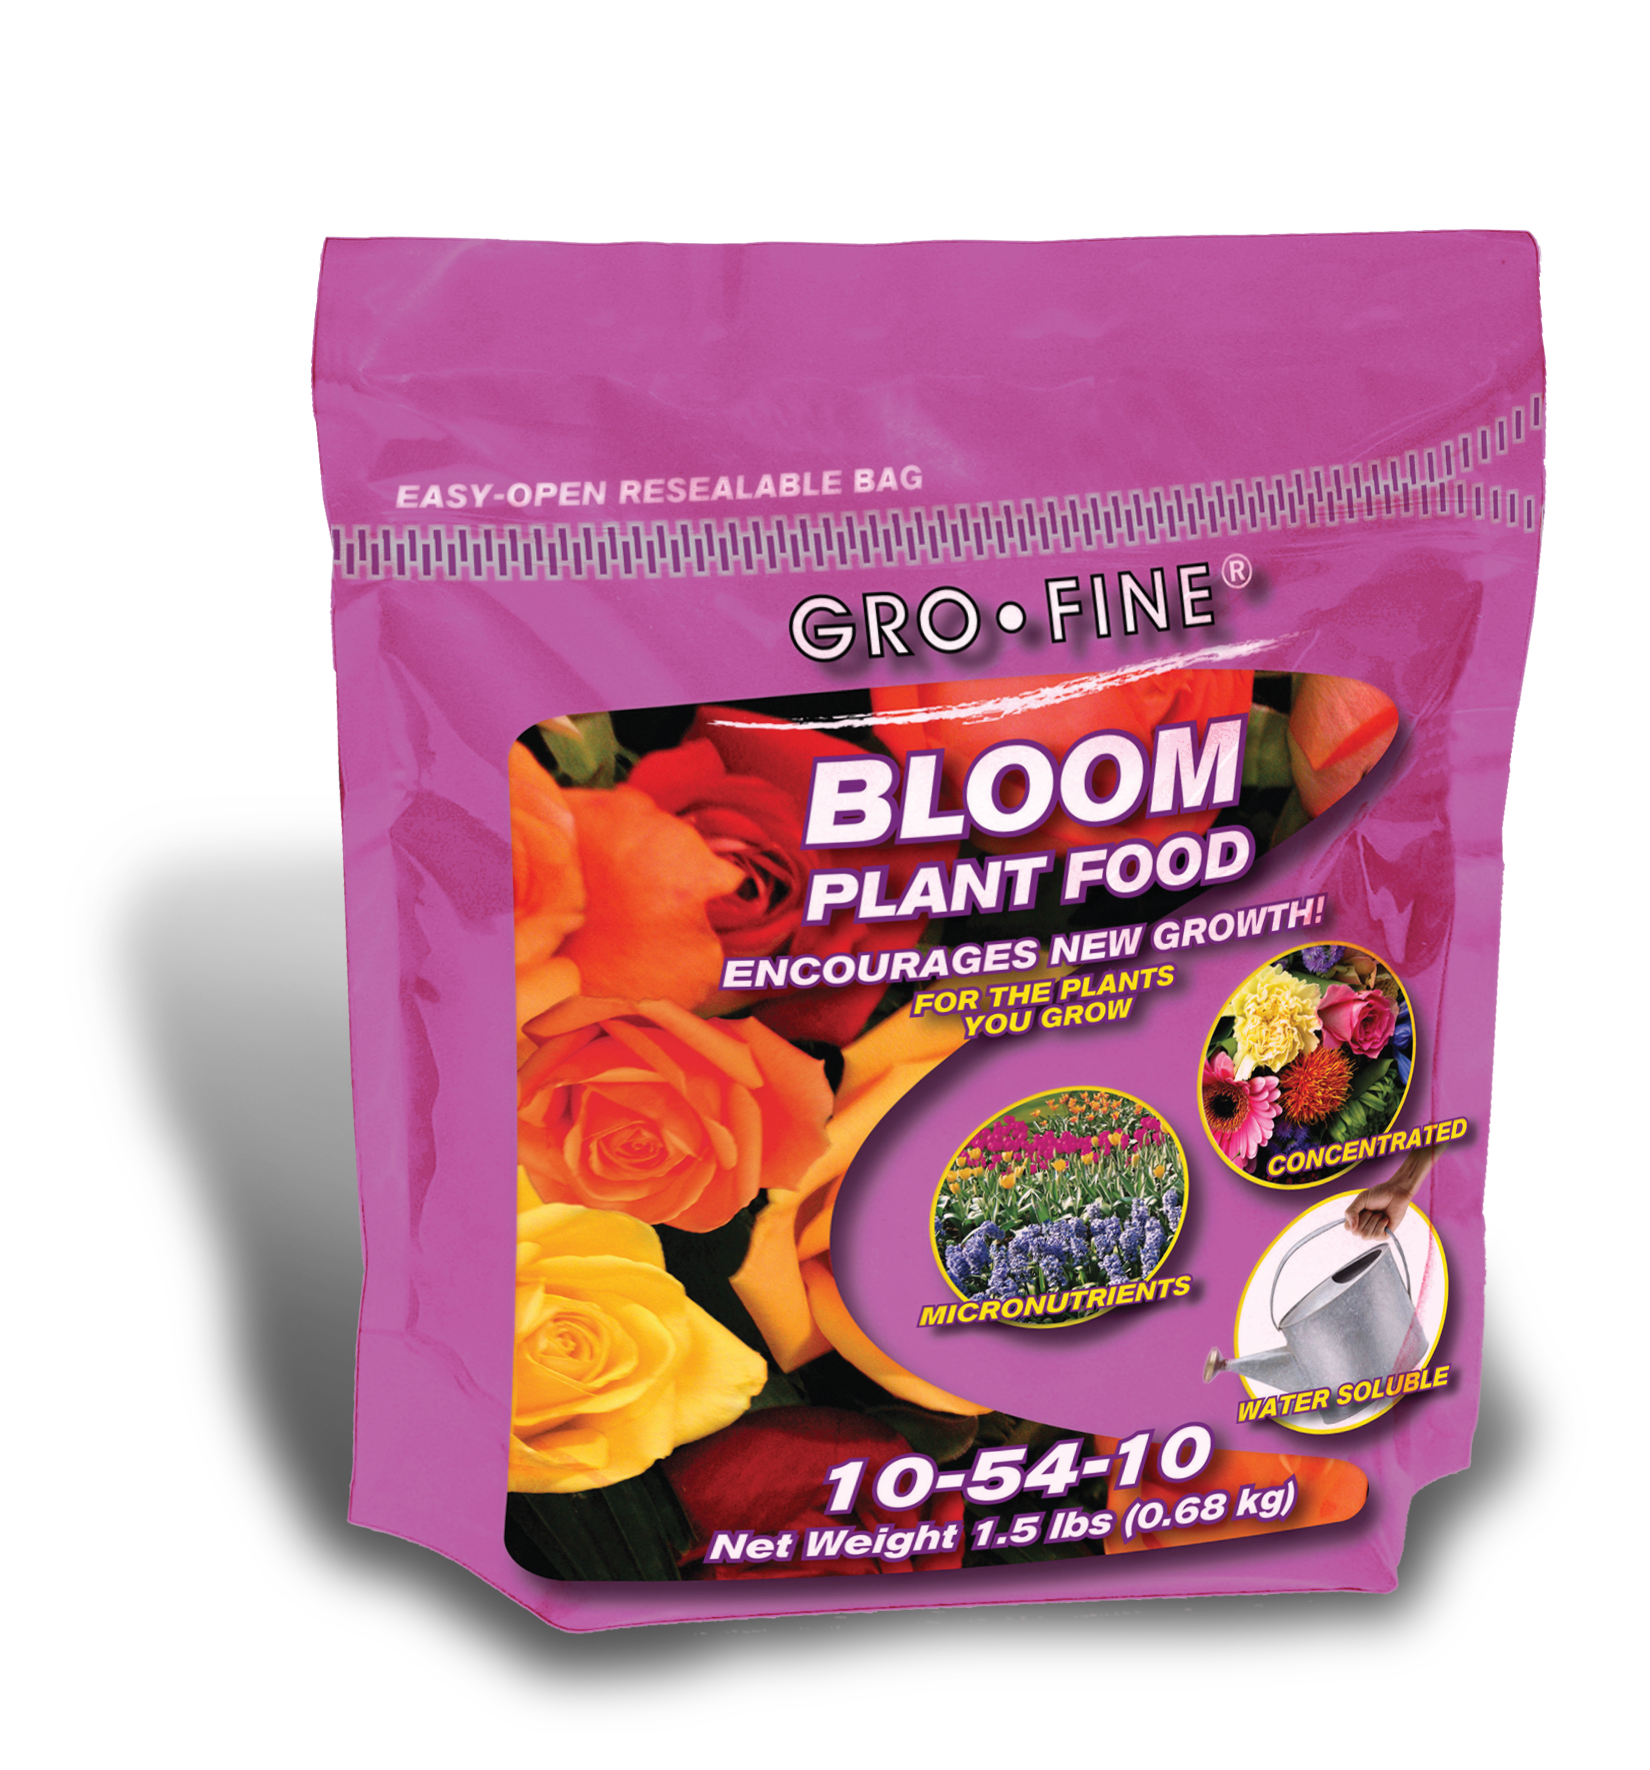 Bloom Plus